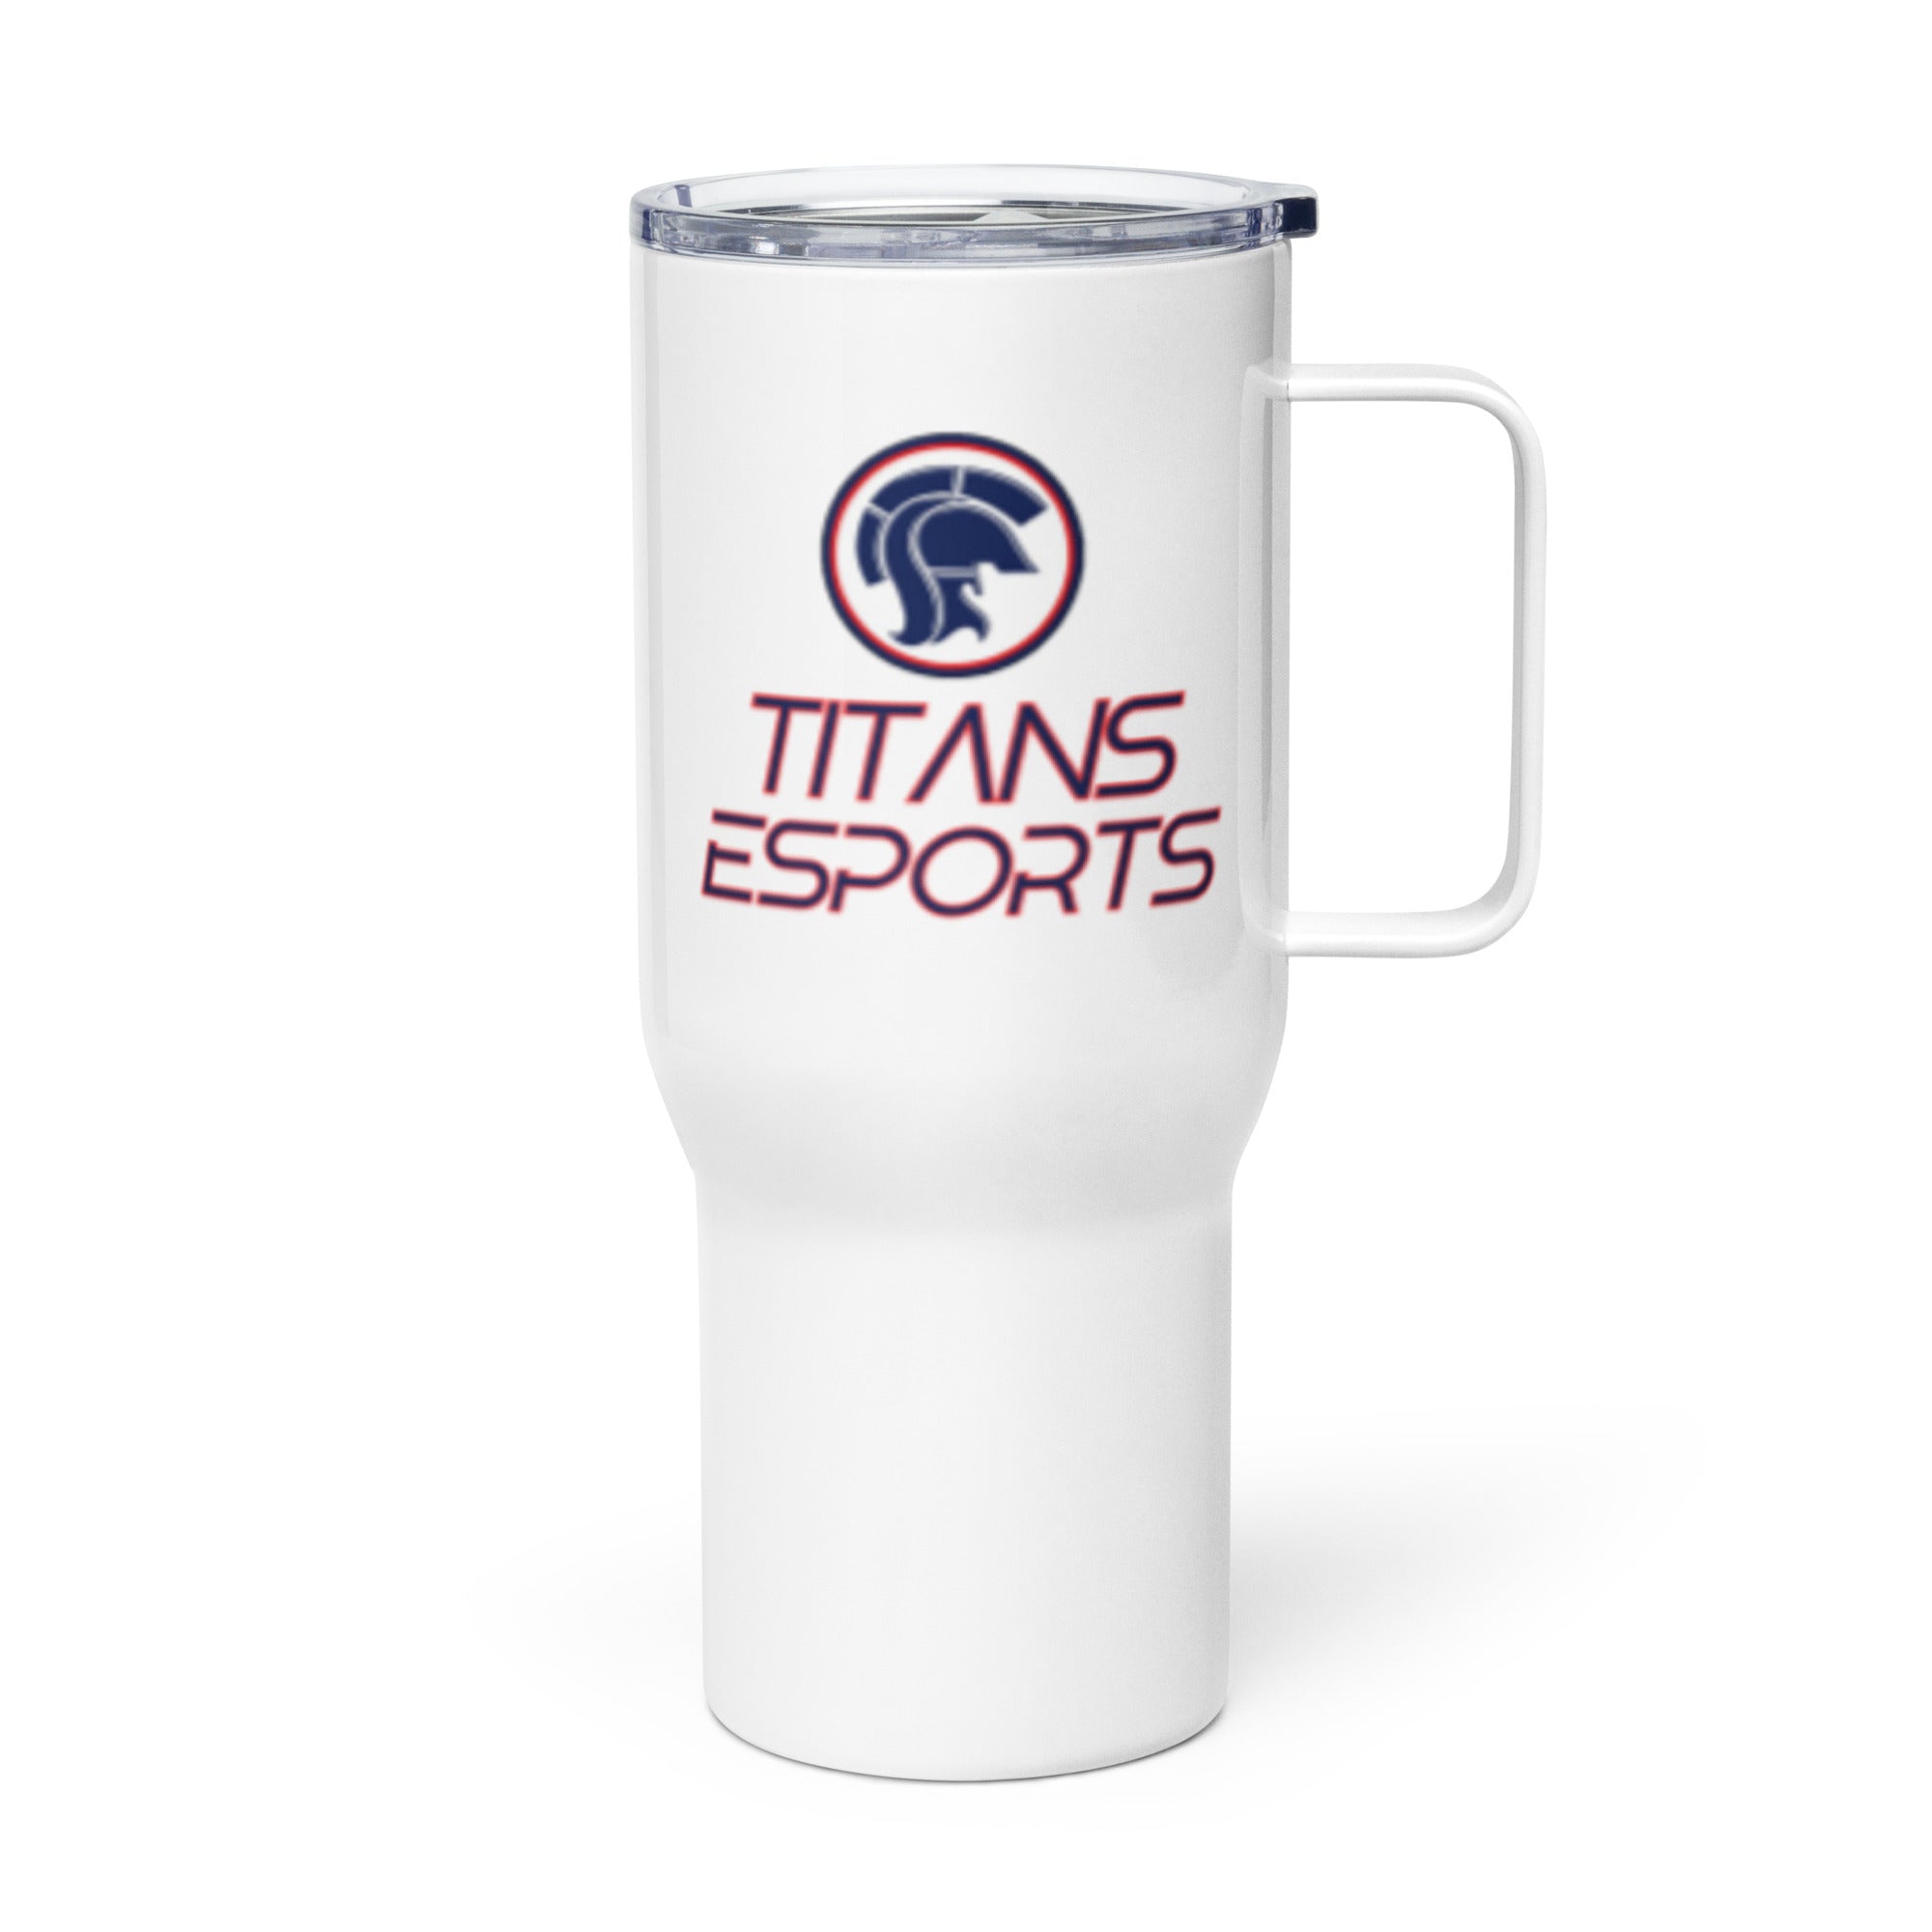 Titans Esports Travel Mug